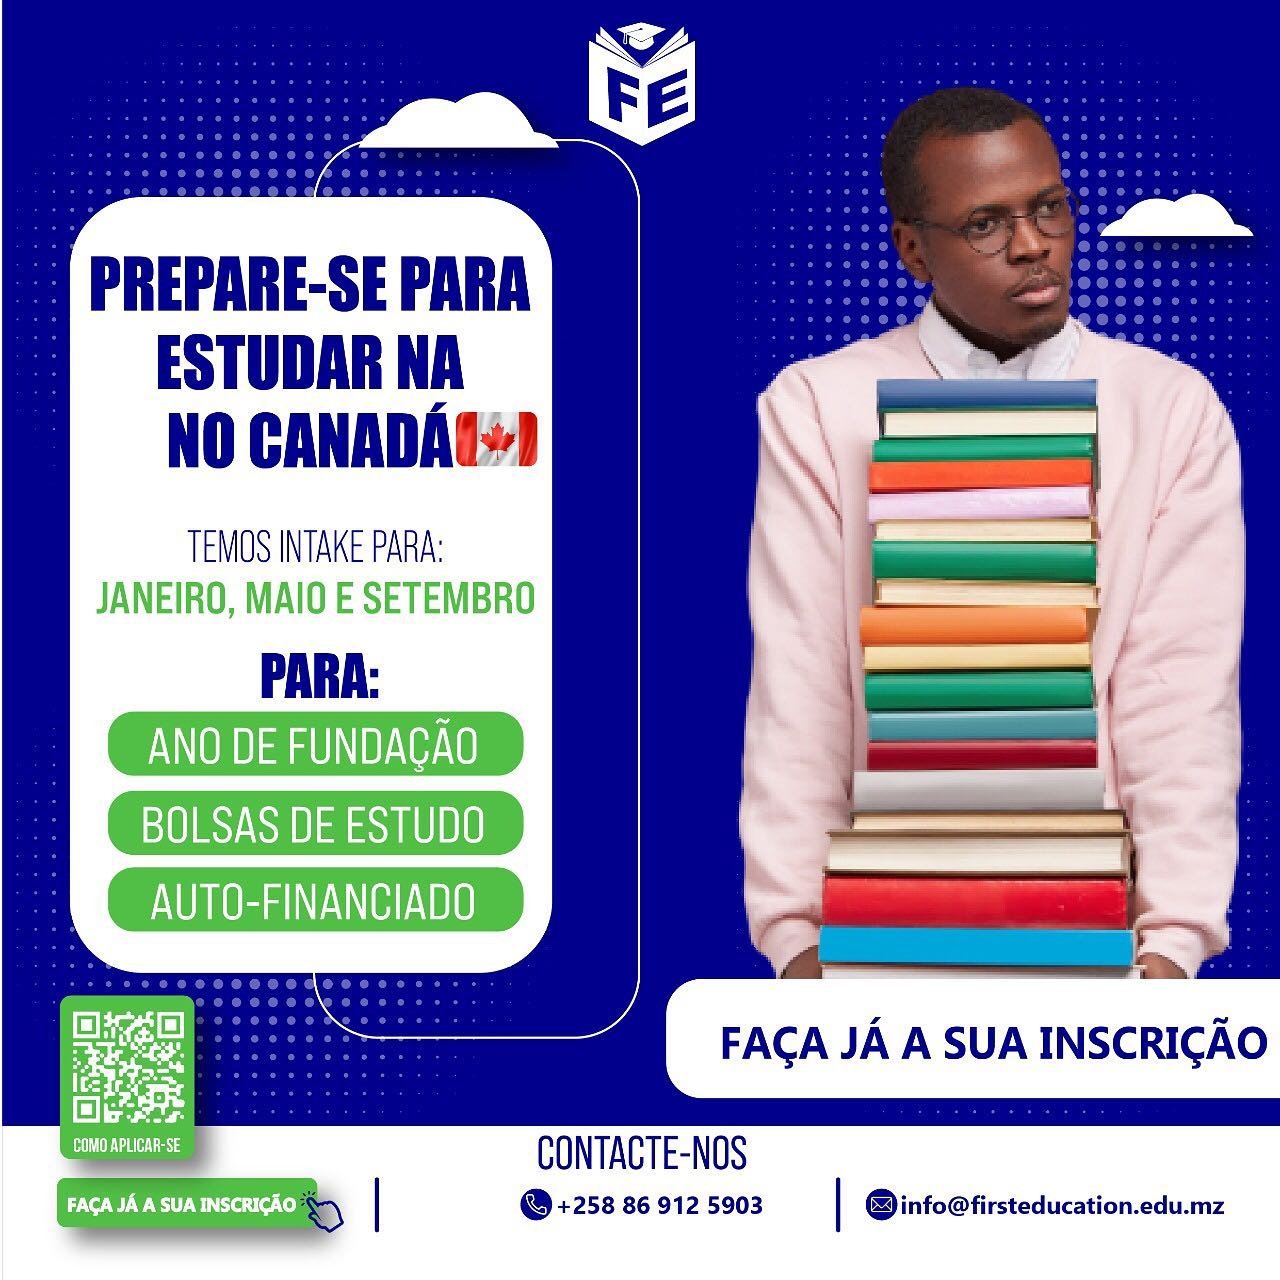 Prepare-se para estudar no Canadá